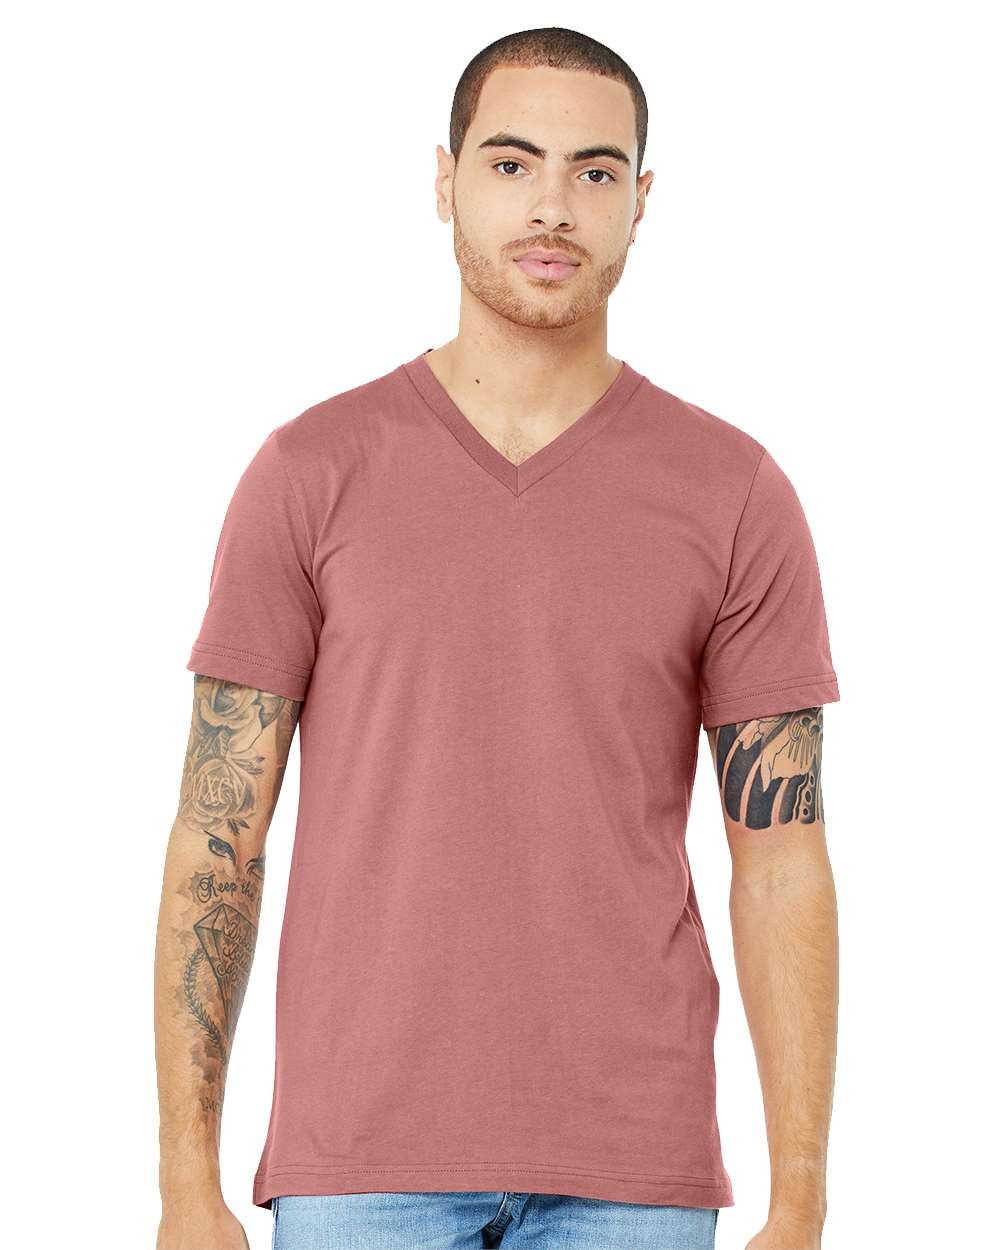 man wearing bella+canvas adult v-neck t-shirt in mauve